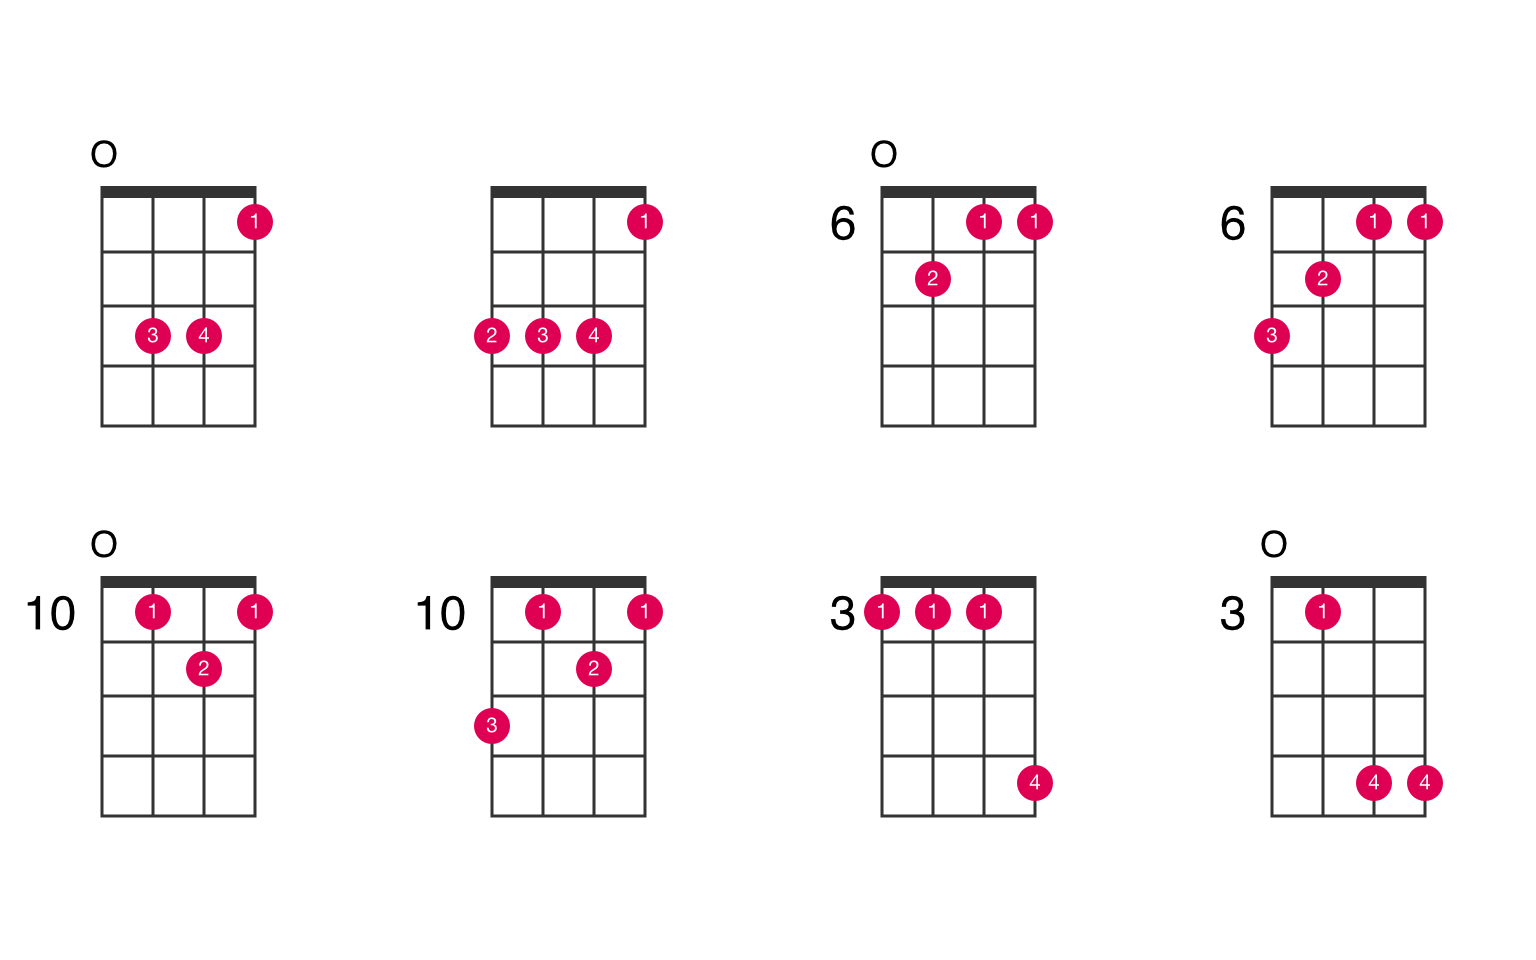 The key of E flat major (D sharp), chords